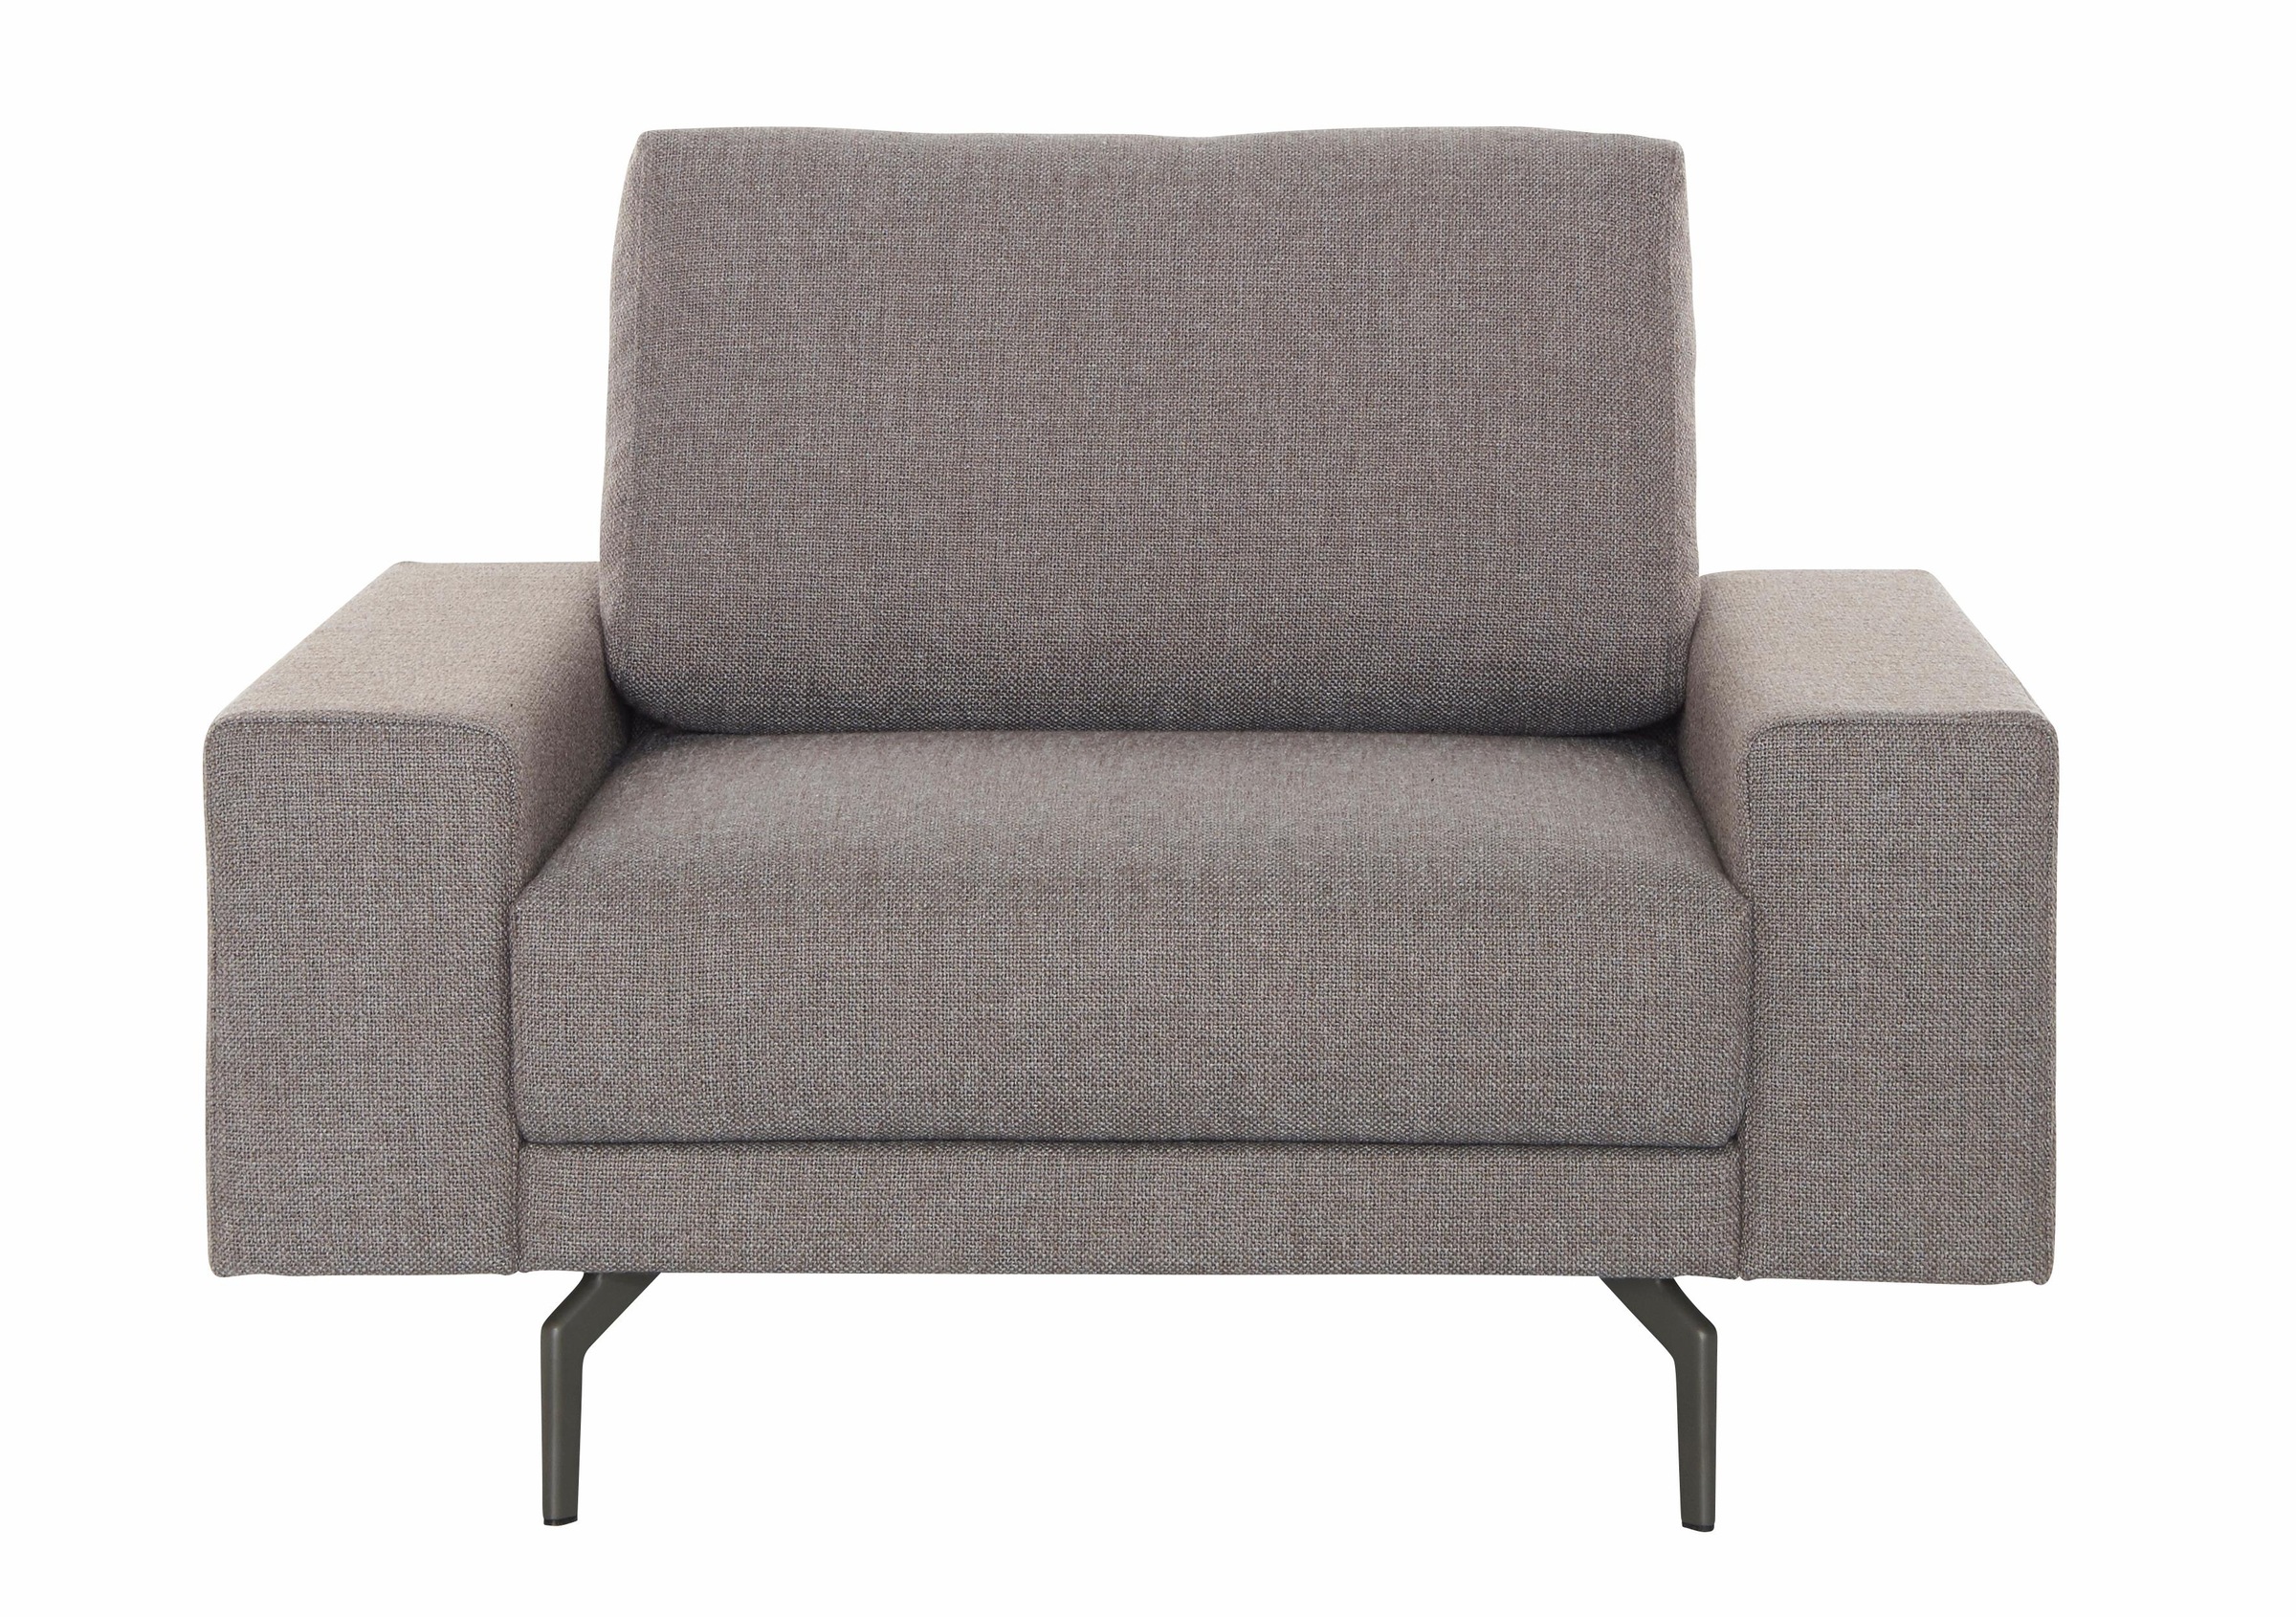 Armlehne breit Alugussfüße BAUR umbragrau, hülsta sofa in niedrig, 120 »hs.450«, Sessel Breite cm |